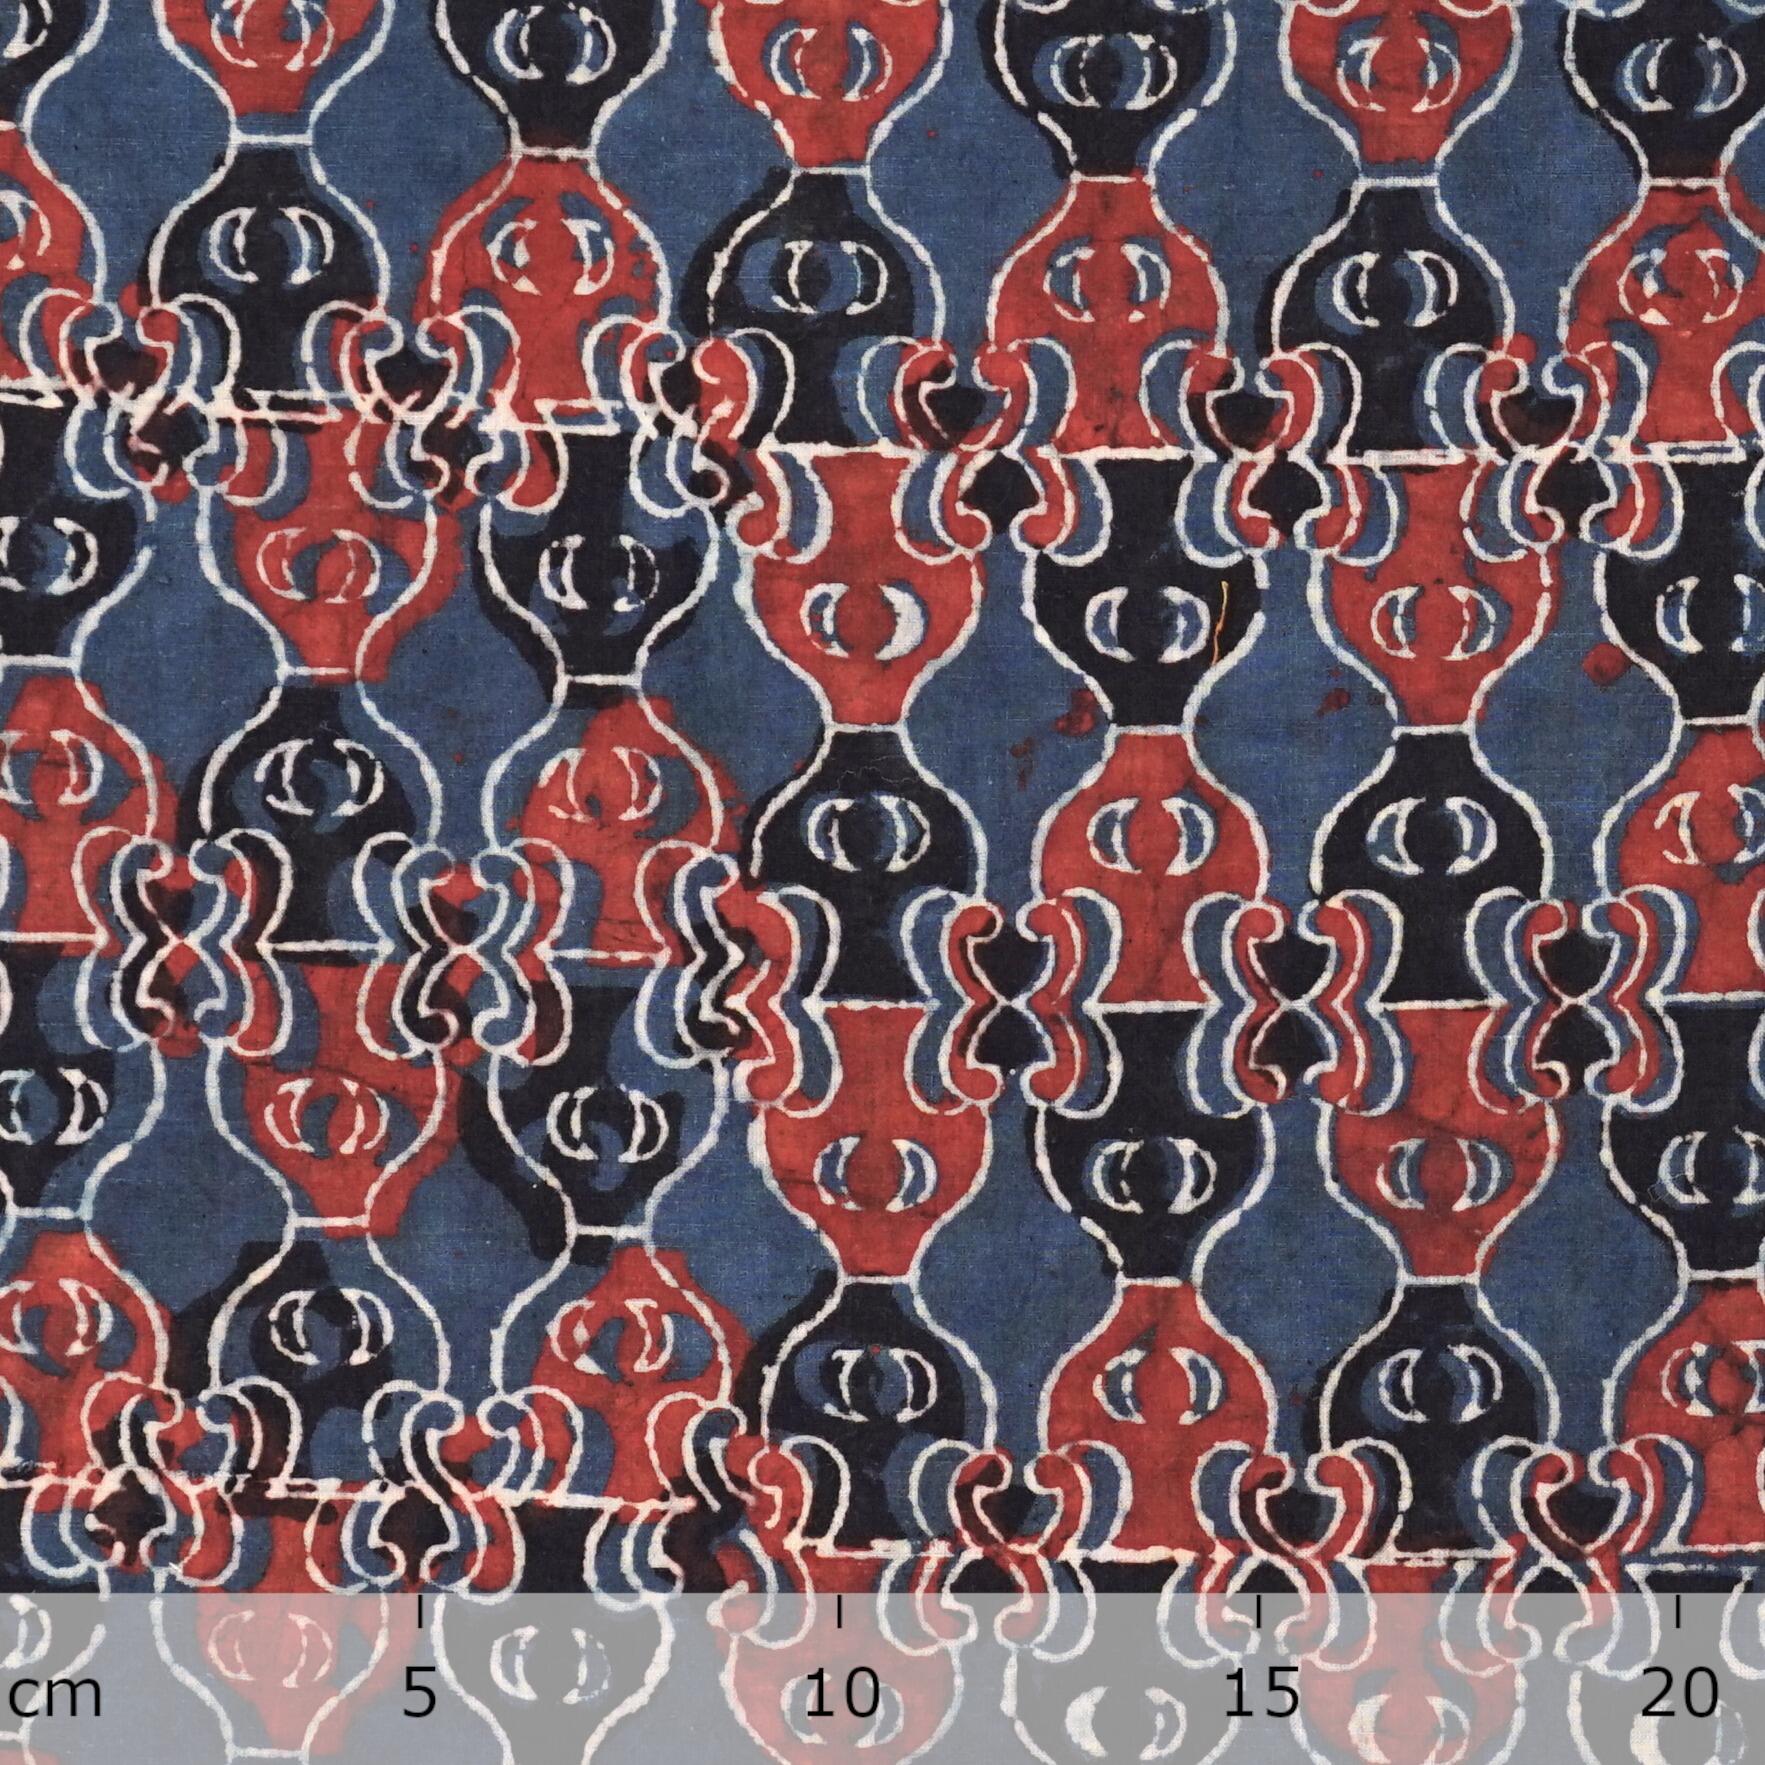 Block Printed Fabric, 100% Cotton, Ajrak Design: Indigo Blue Base, Iron Black, Madder Red Pump. Ruler